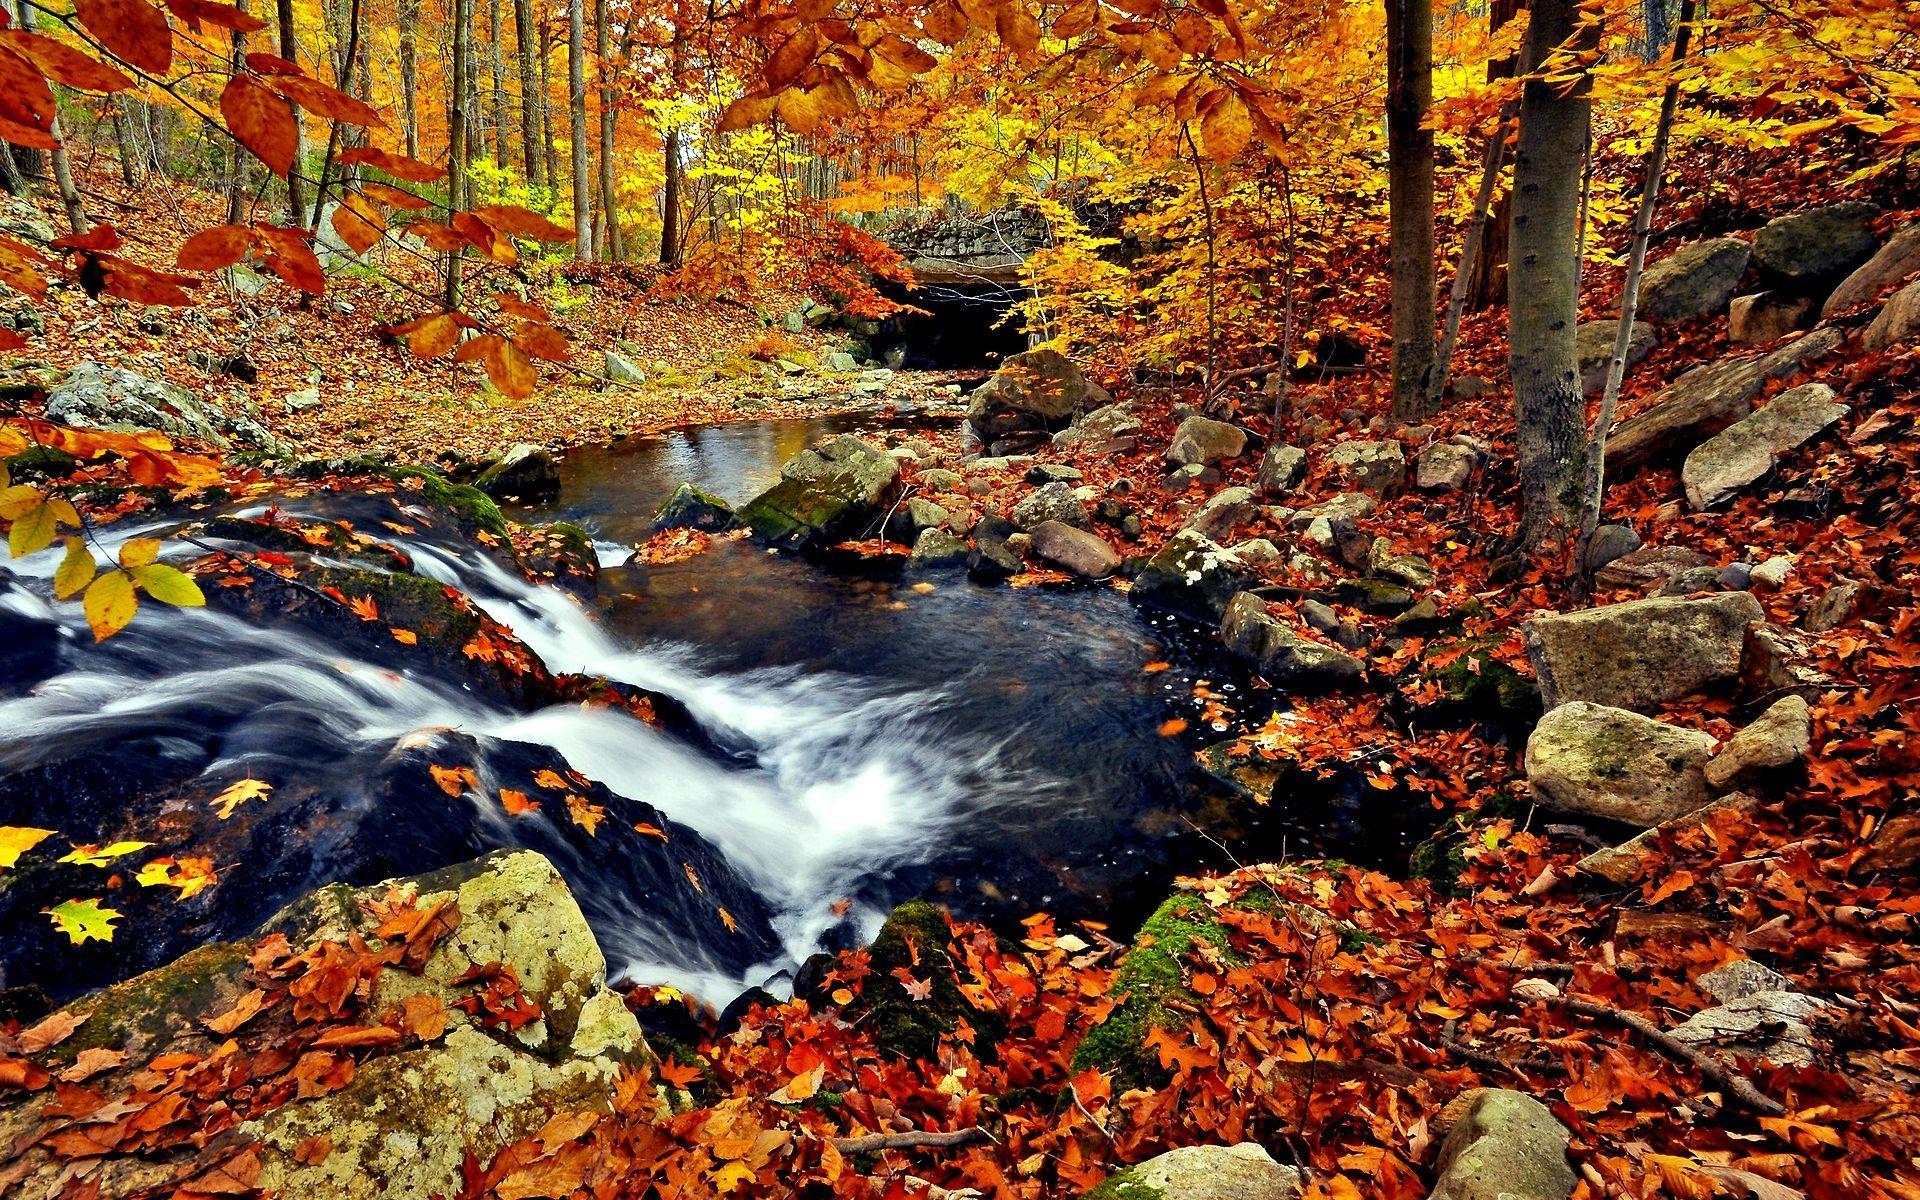 Autumn Forest Wallpaper for Desktop. wallpaper.wiki